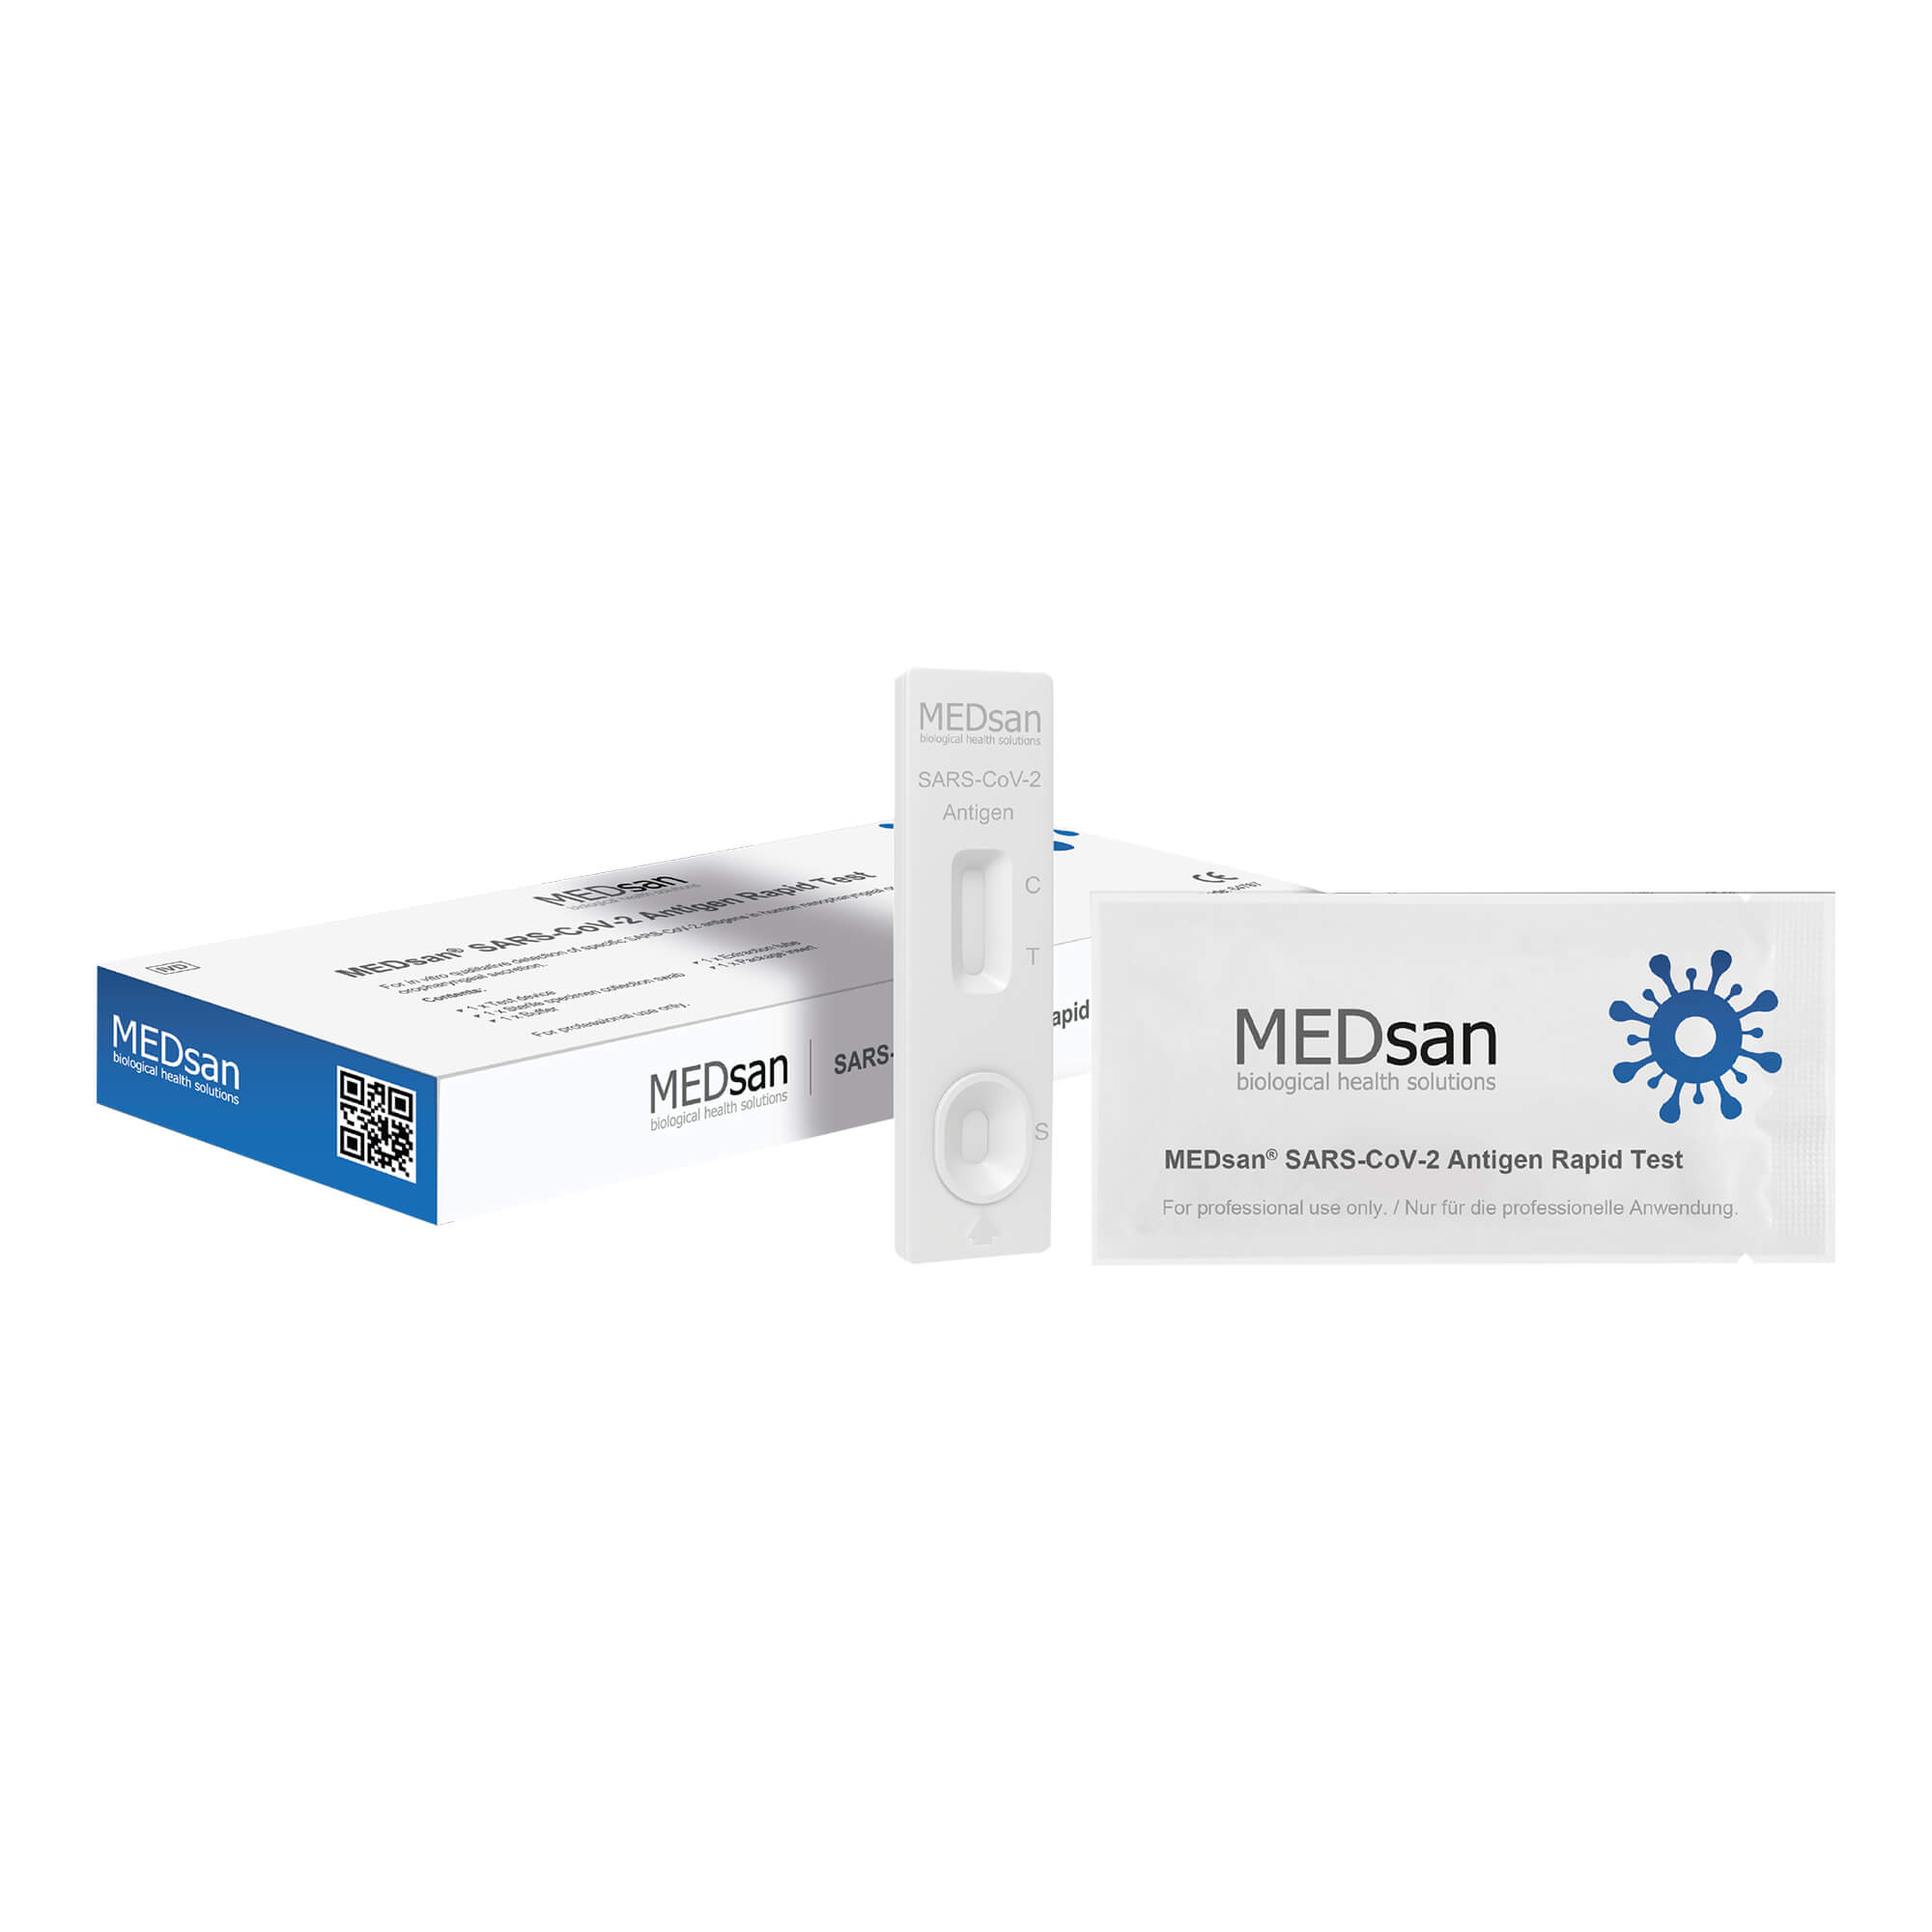 MEDsan SARS-CoV-2 Antigen Rapid Test